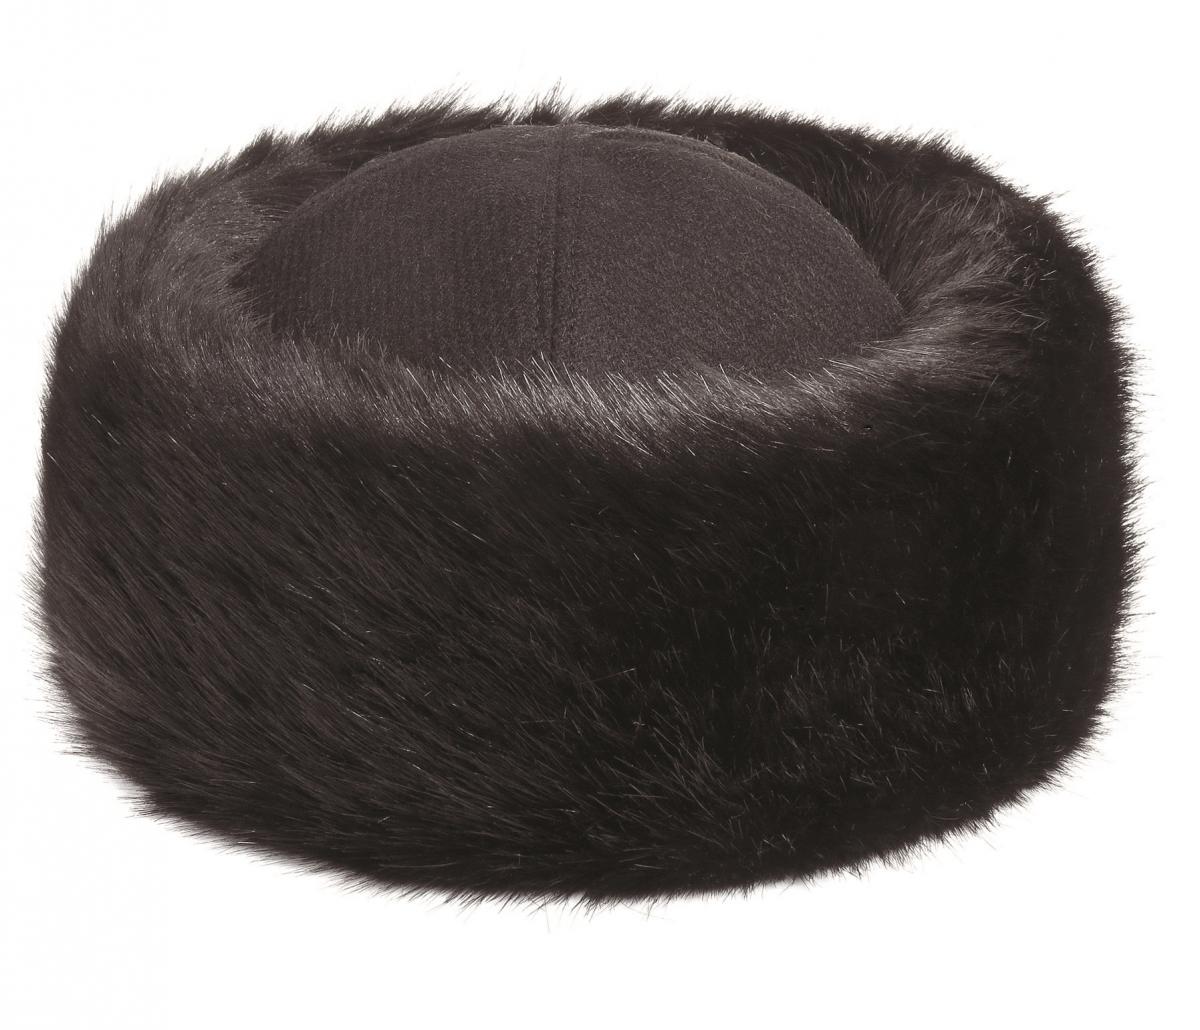 Cuckooland.com, Faux Fur Occasional Hat In Jet Black, £45